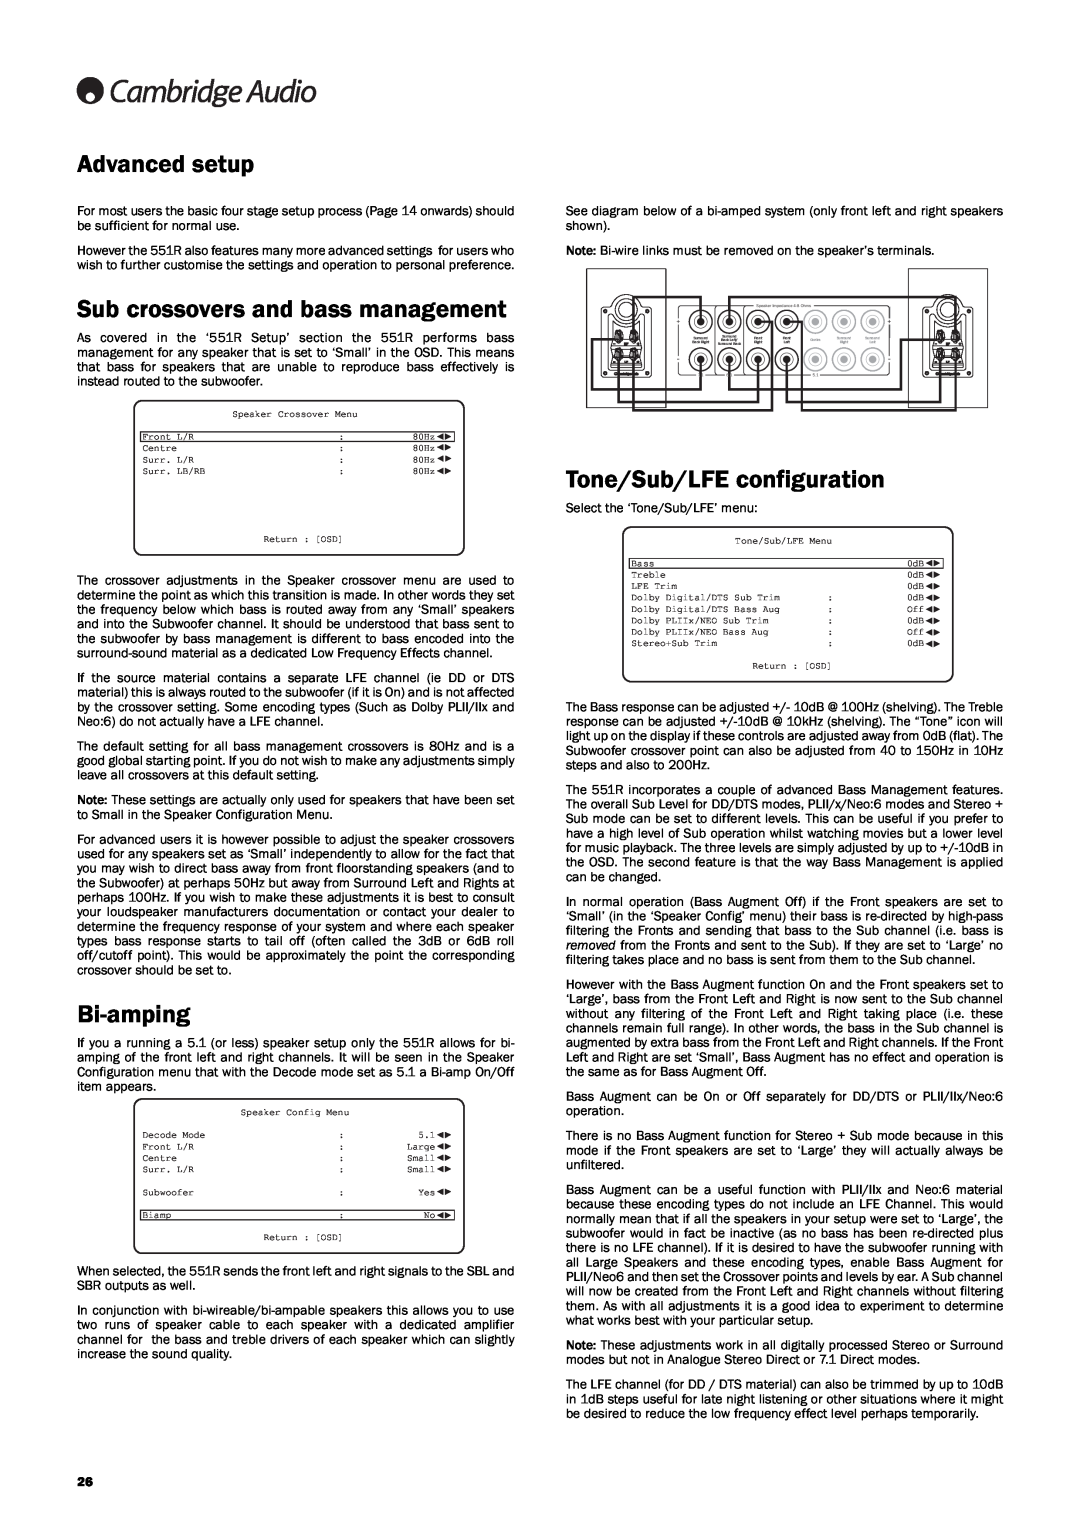 Cambridge Audio 551R user manual Advancedsetup, Subcrossoversandbassmanagement, Bi-amping, Tone/Sub/LFEconfiguration 